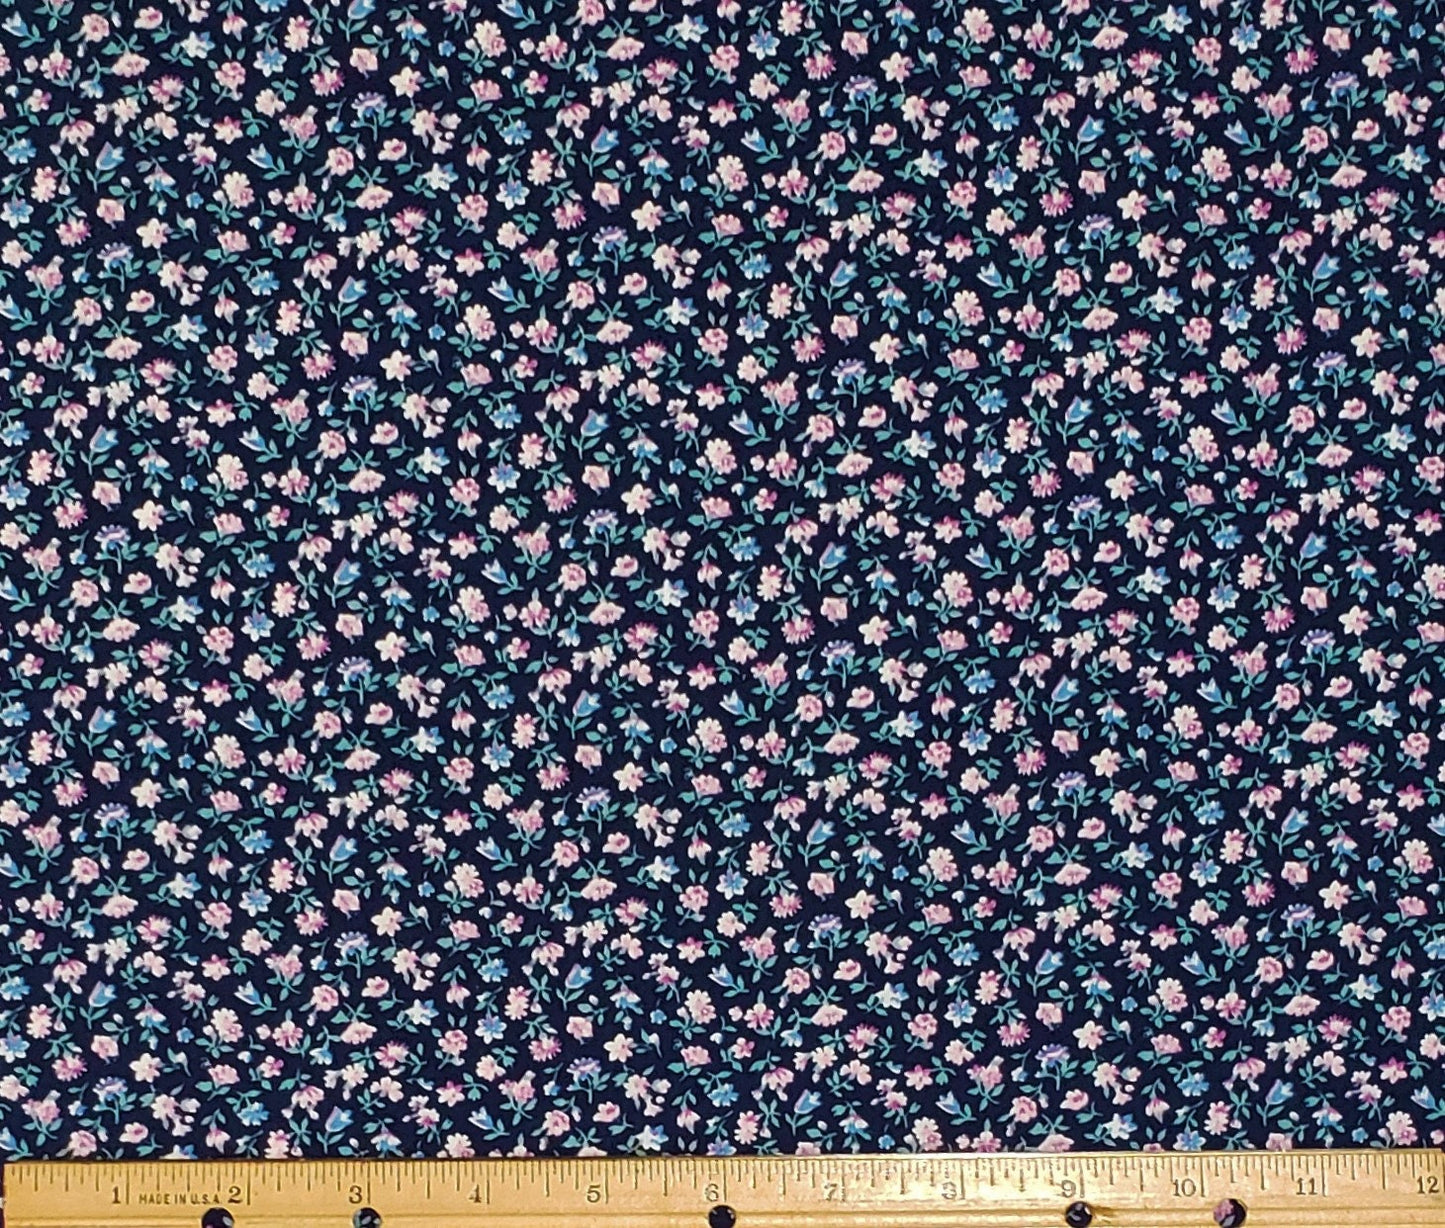 Peter Pan Fabrics - Dark Blue Fabric / Pink and Blue Flowers